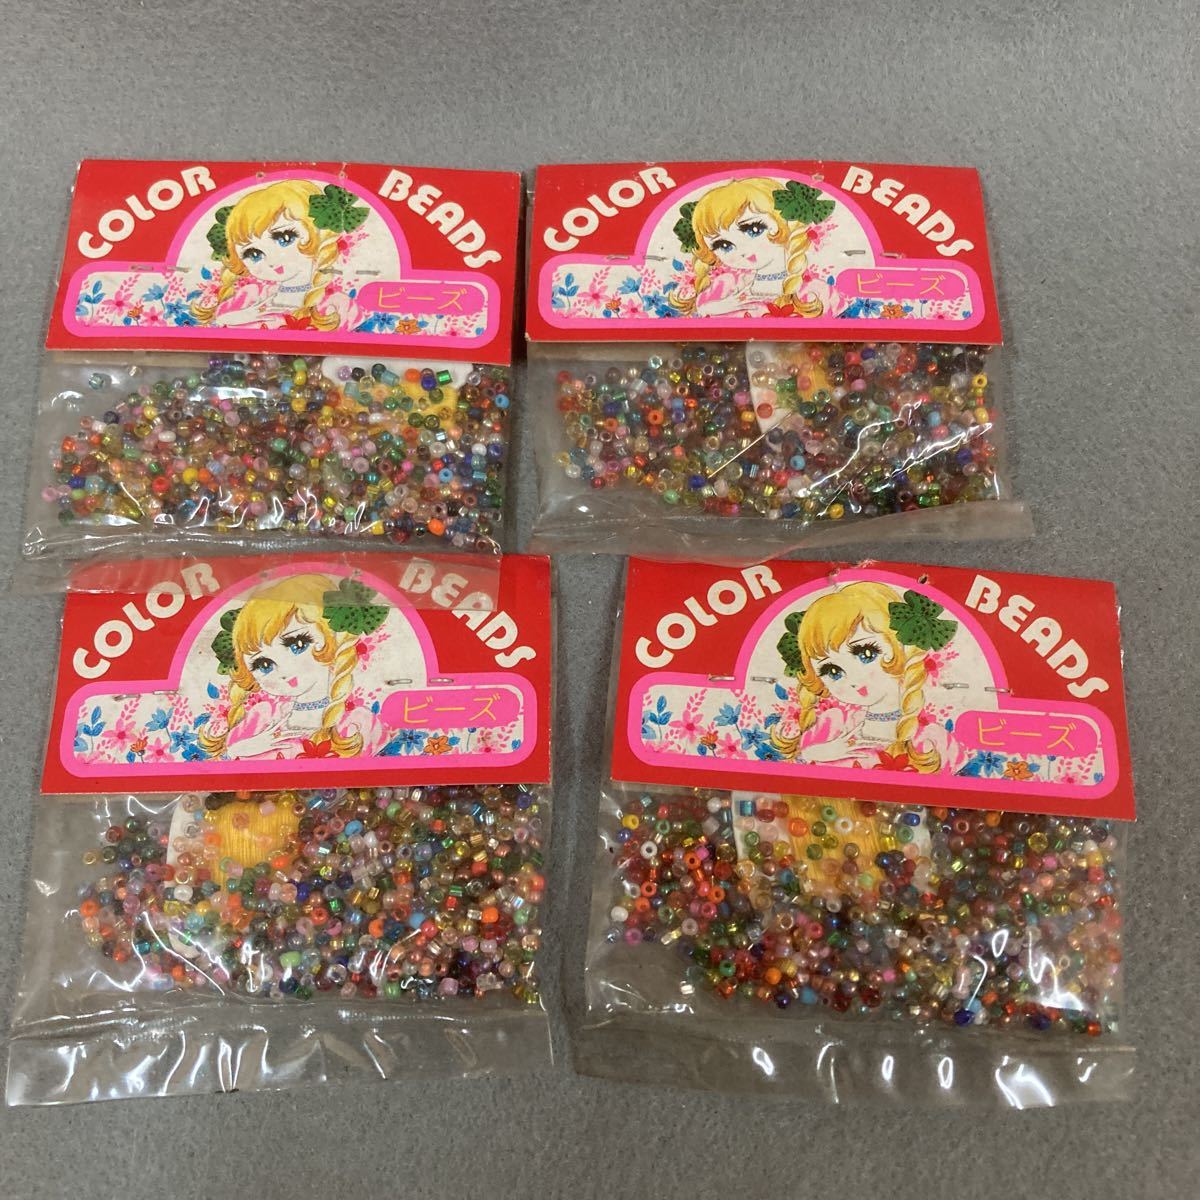  Showa Retro color beads 4 sack 1970 period that time thing retro pop cheap sweets dagashi shop fancy 